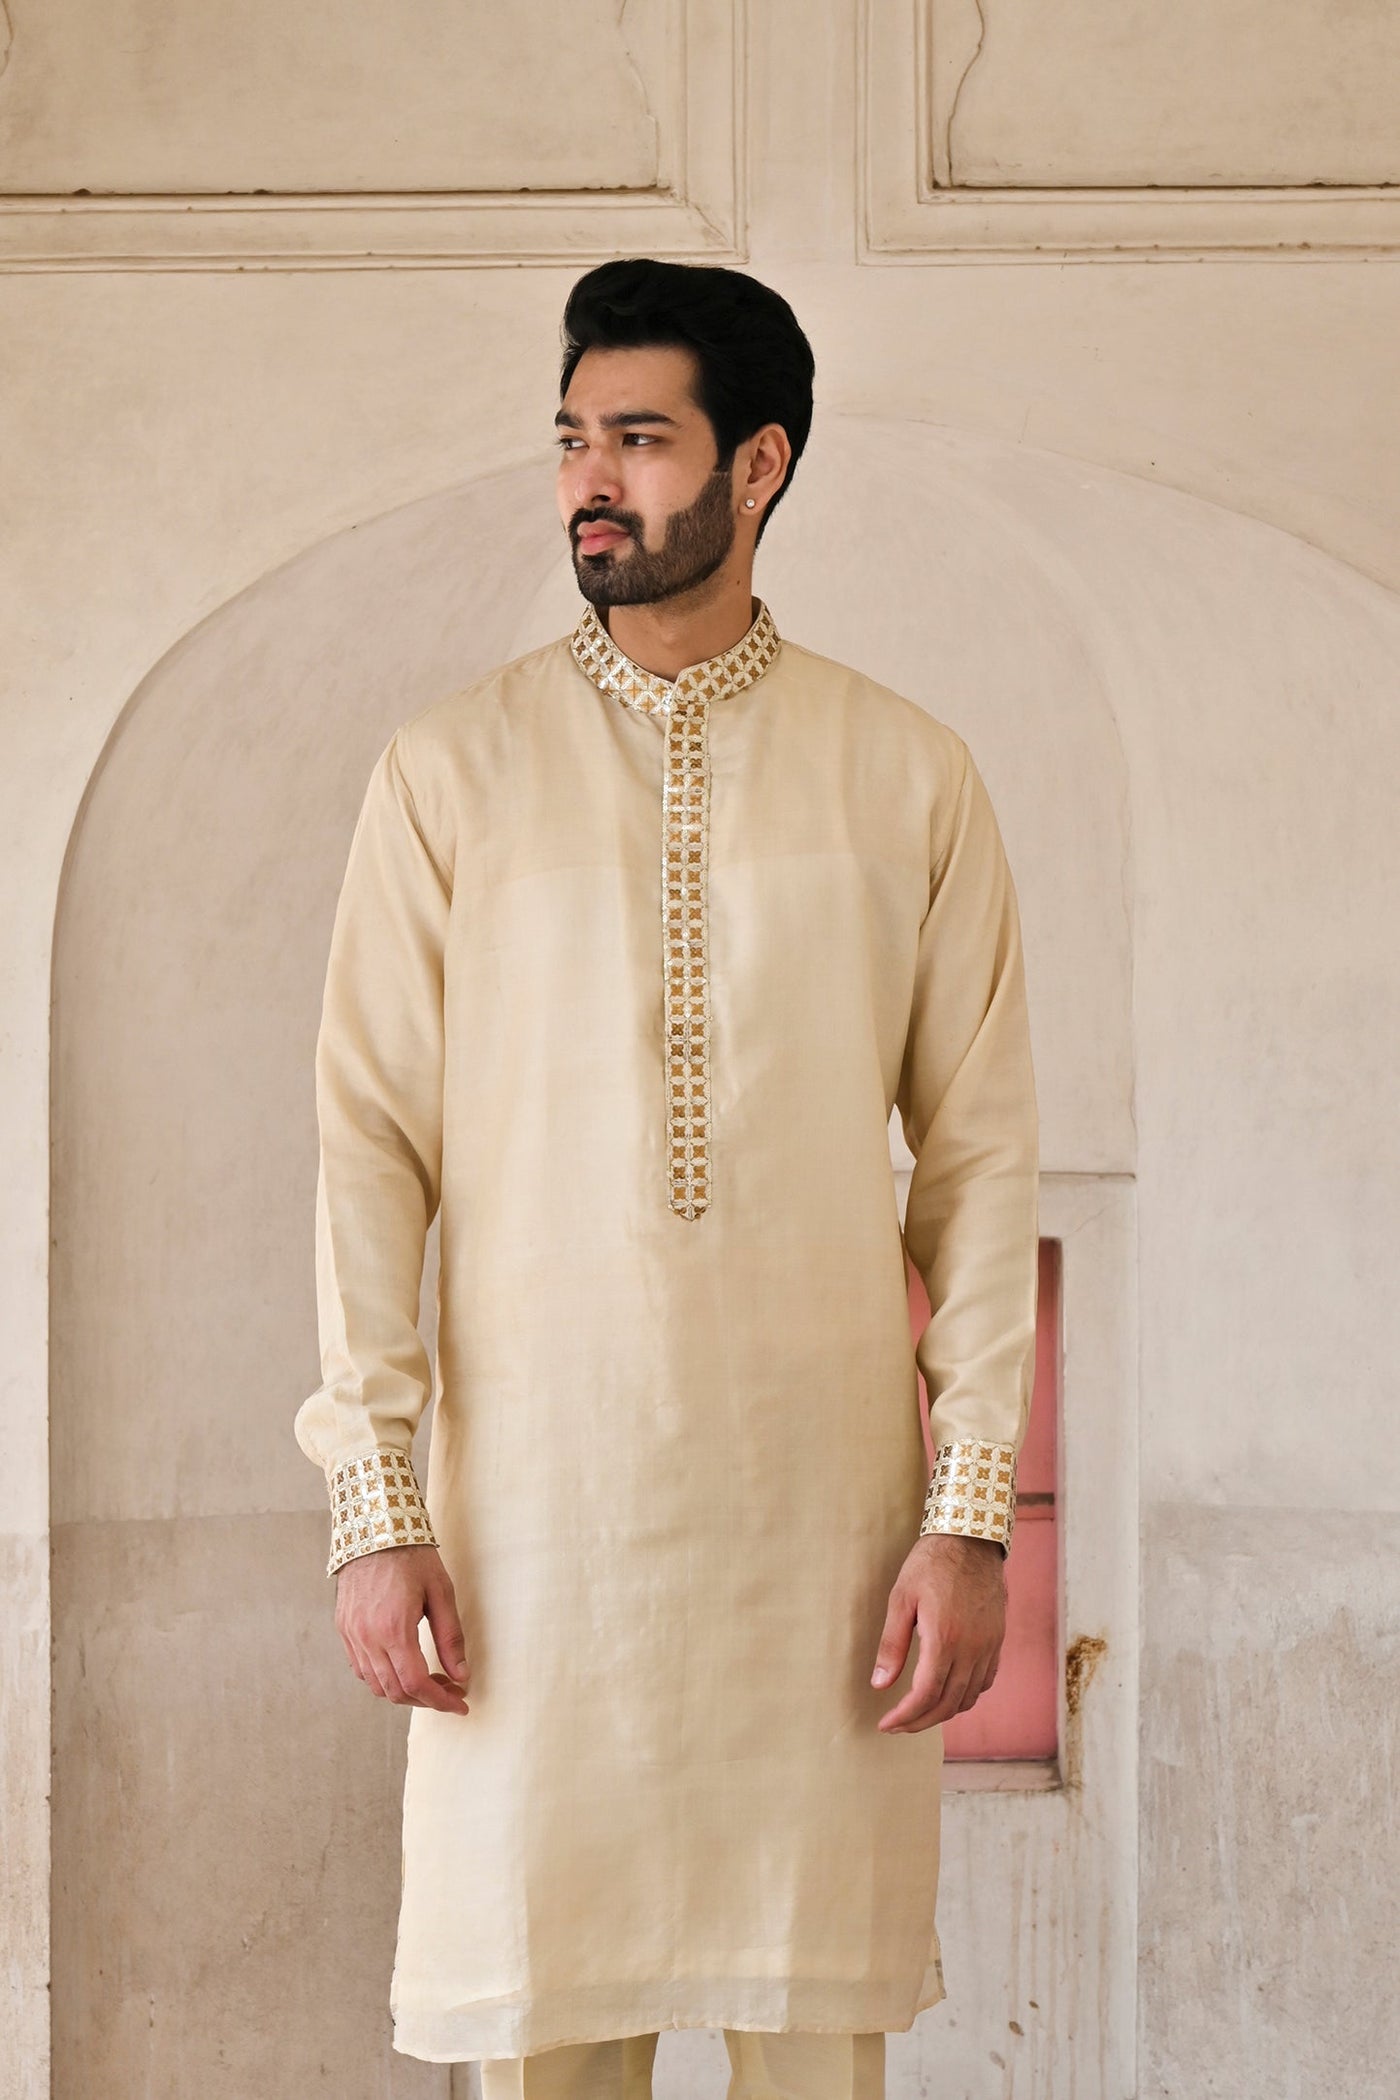 Shop online for beige Banarasi collar kurta set for men